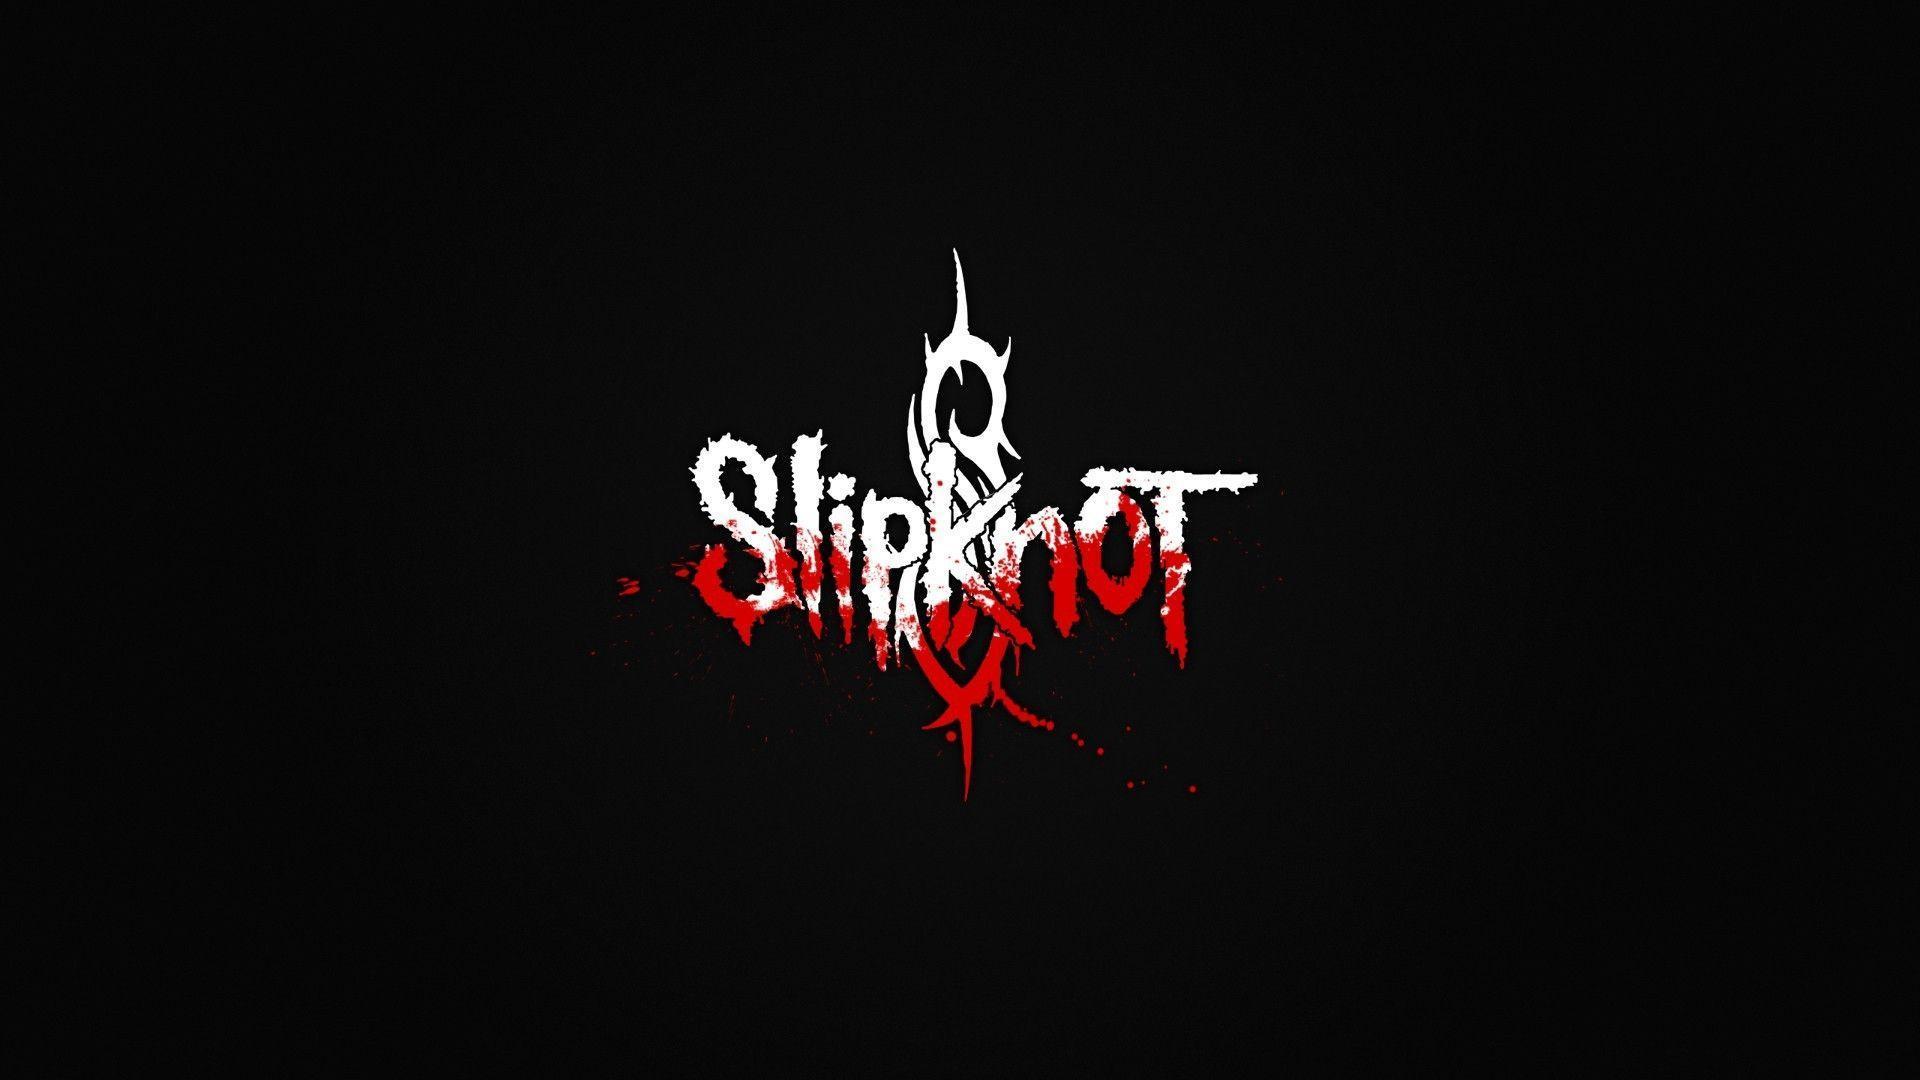 Slipknot Wallpapers 25416 1920x1080 px ~ HDWallSource